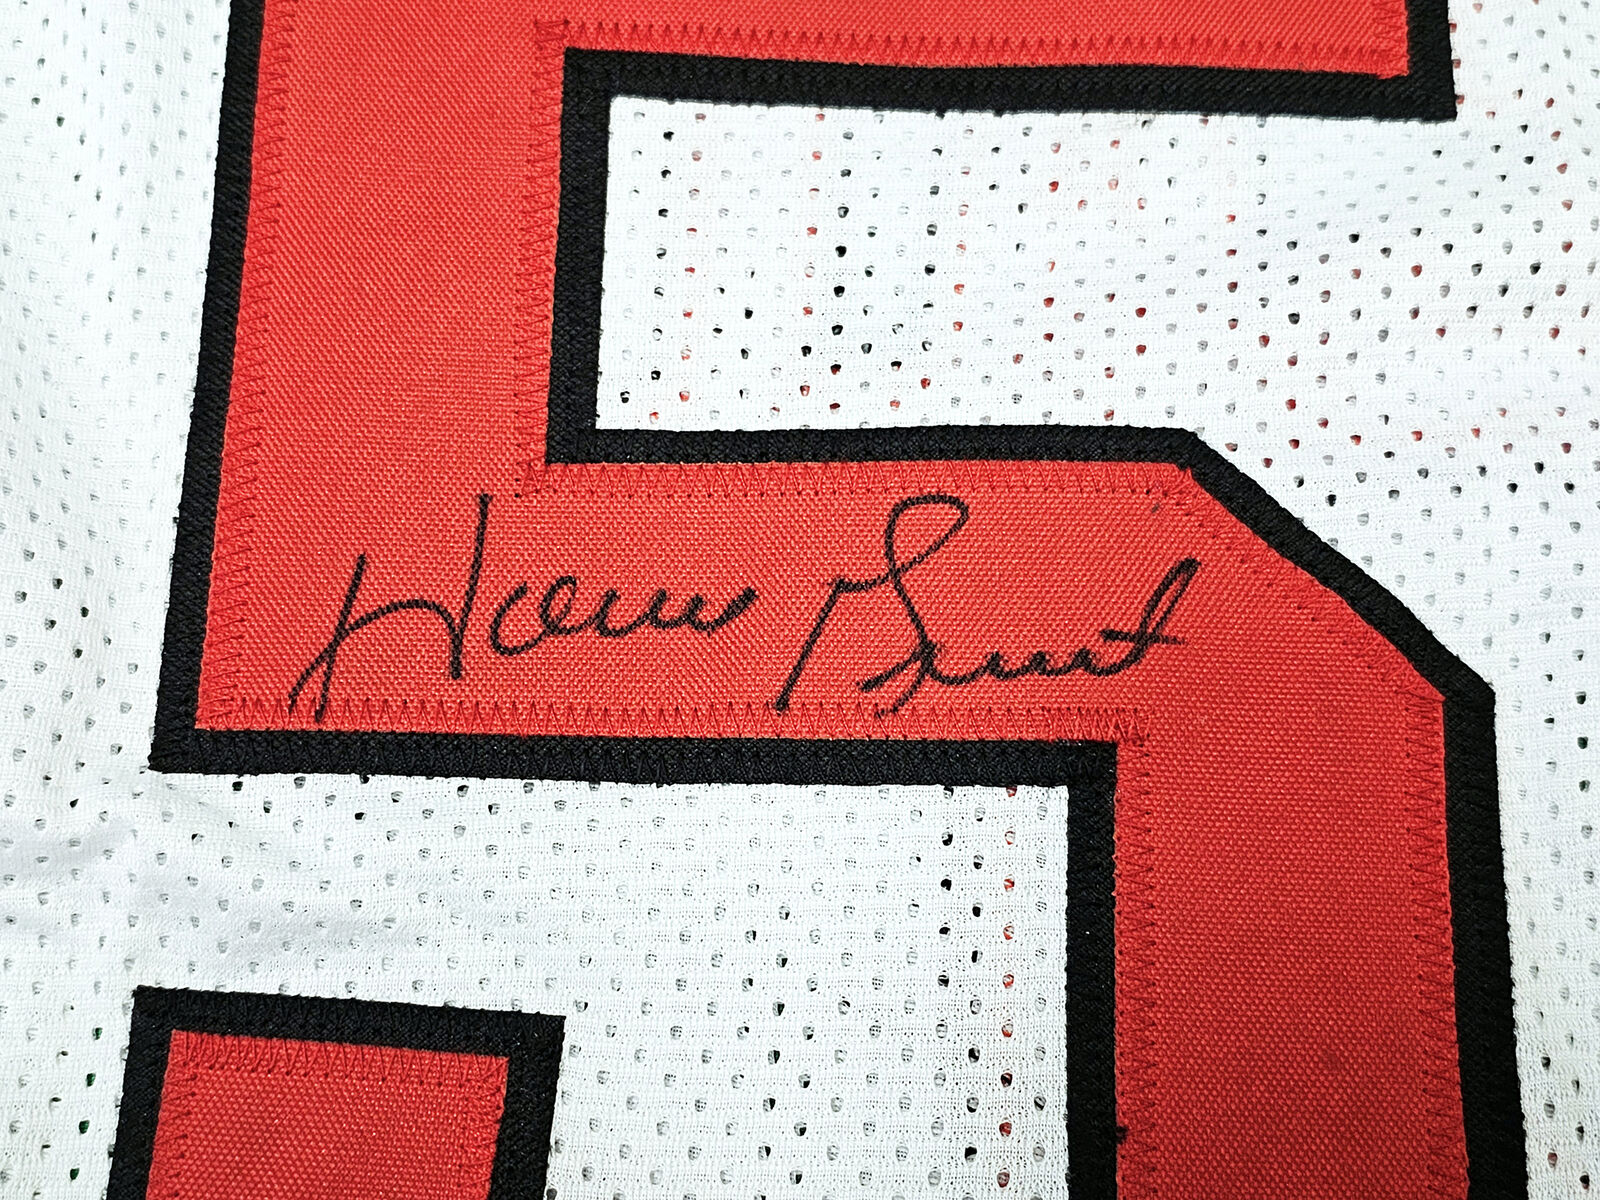 Horace Grant - Chicago Bulls - Signed Framed Jersey 4x Champ